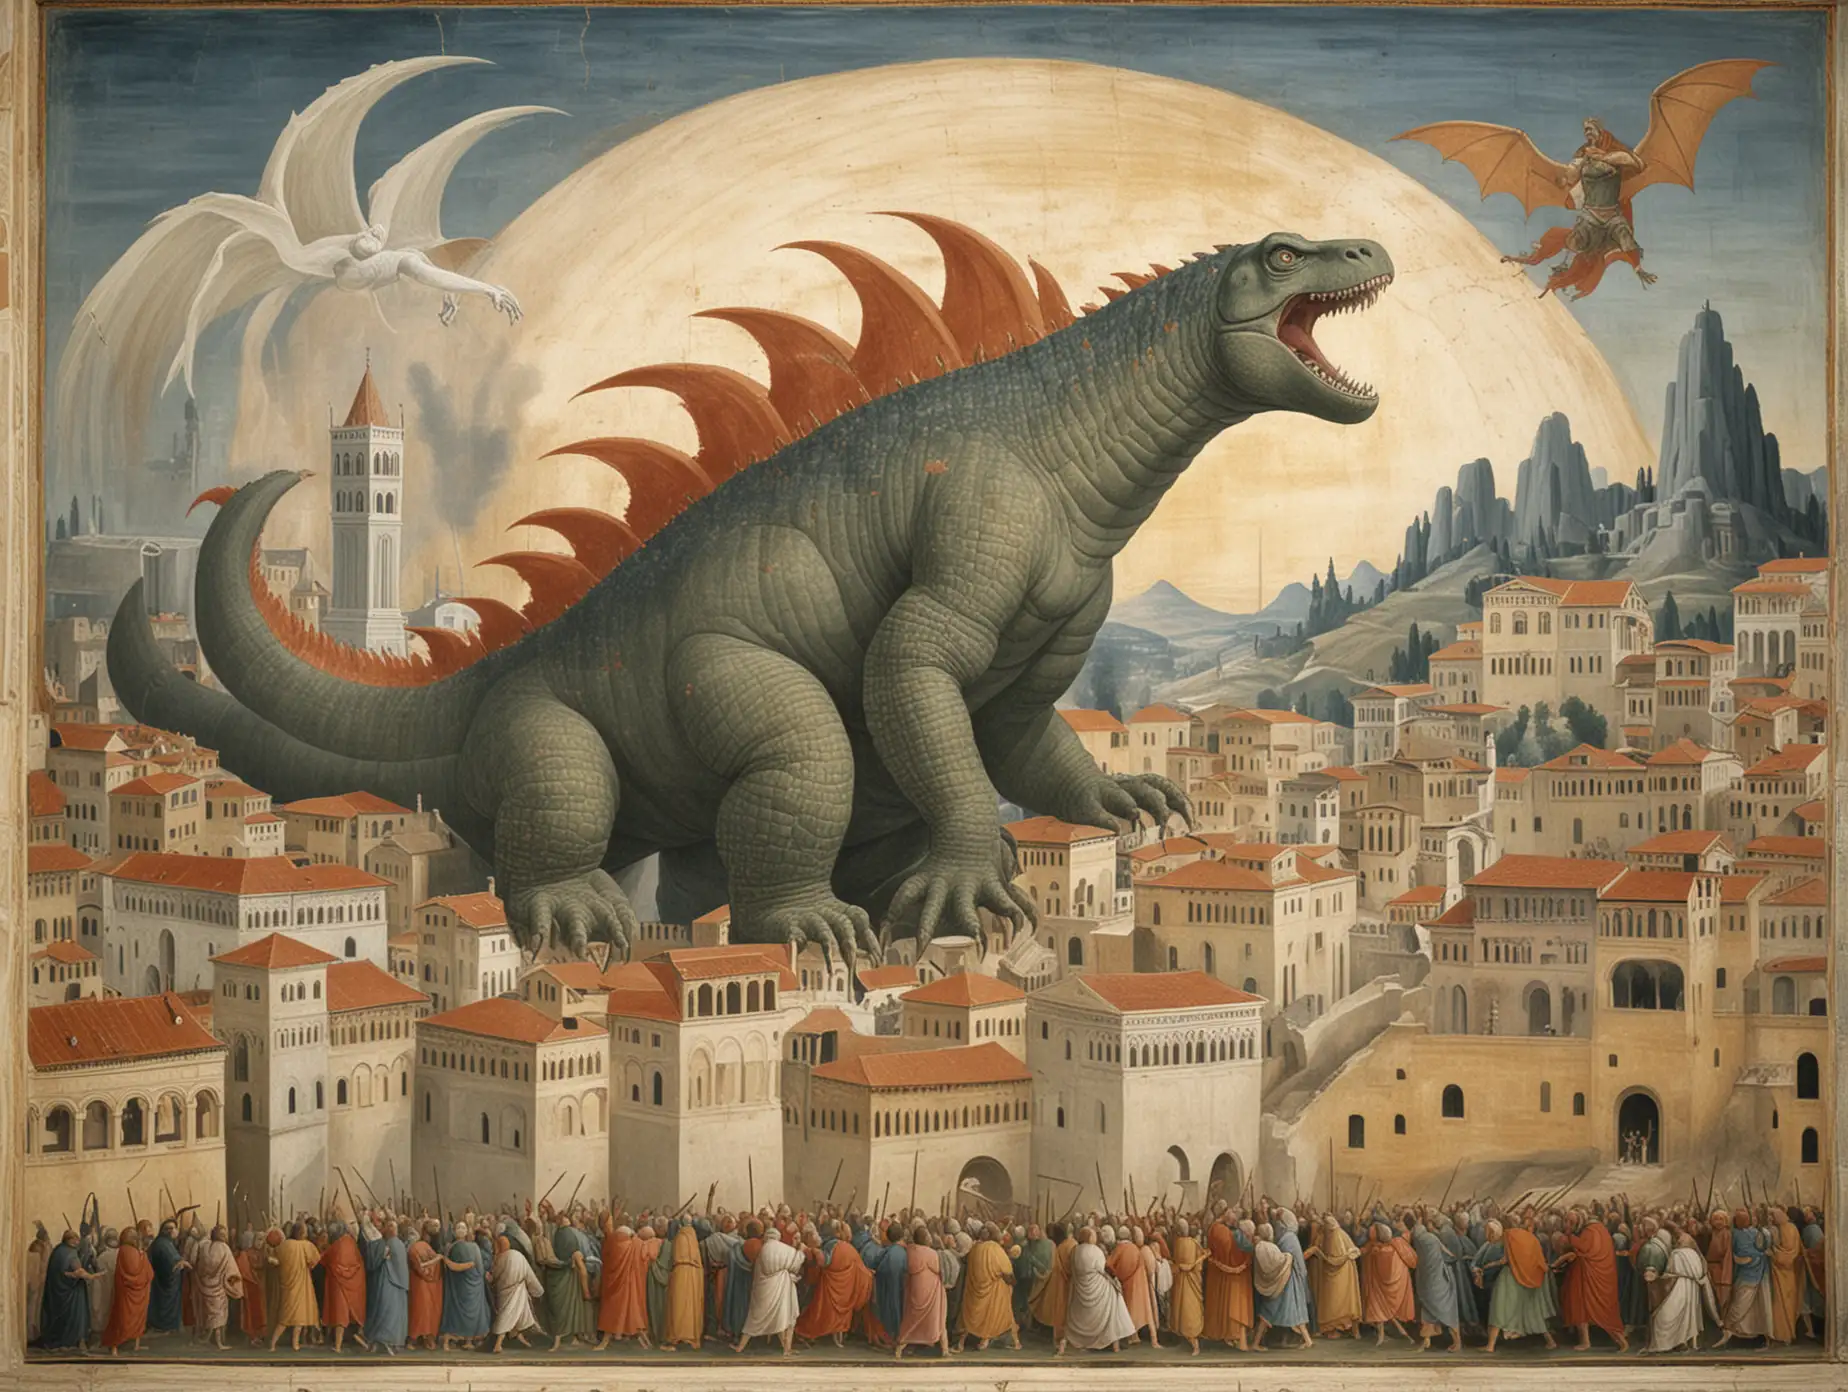 Giotto fresco, showing Godzilla attacking a Roman town